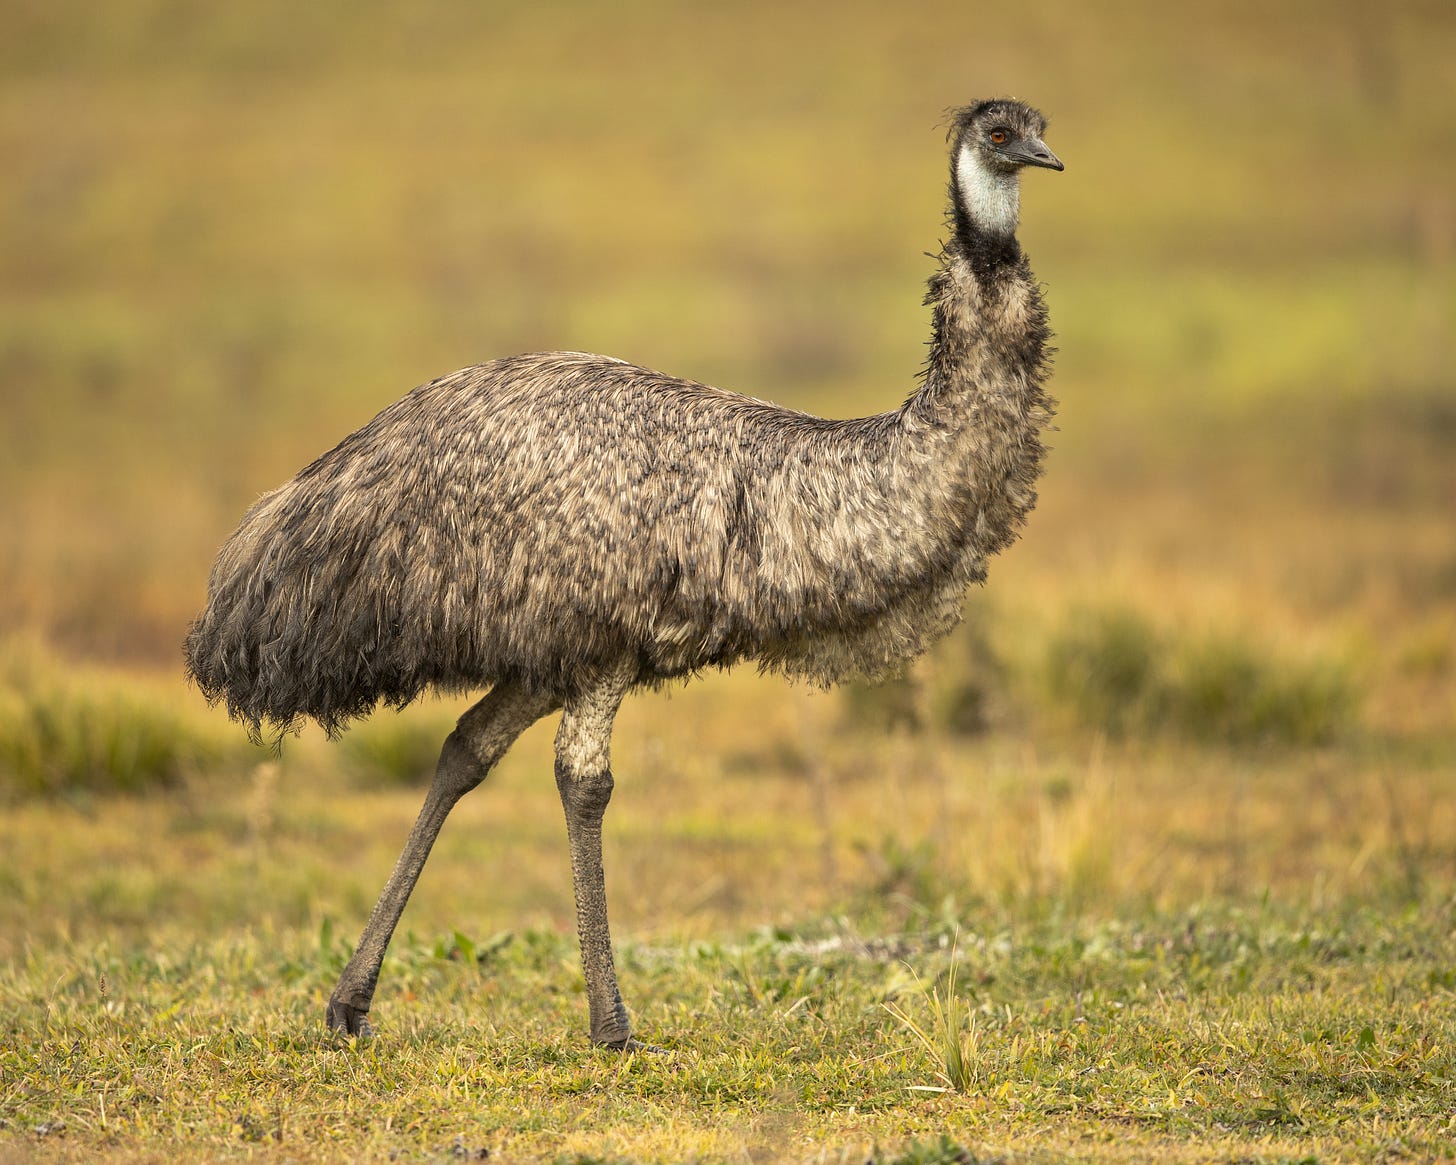 An emu standing in a field